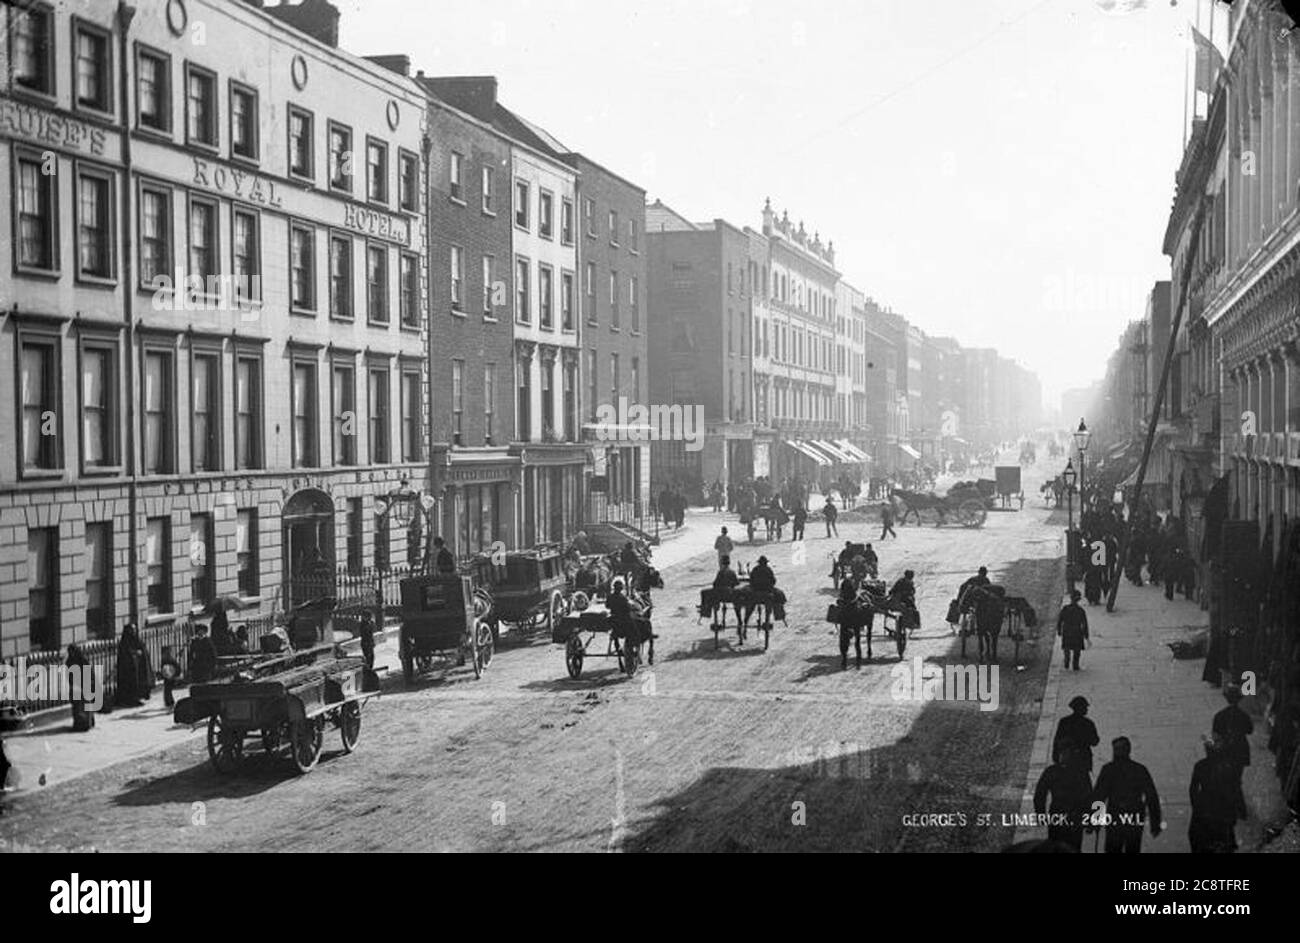 Фото начало 19 века. Дублин Ирландия 19 век. Дублин 20 век. Ирландия города Дублин 19 век. Ирландия 20 век.